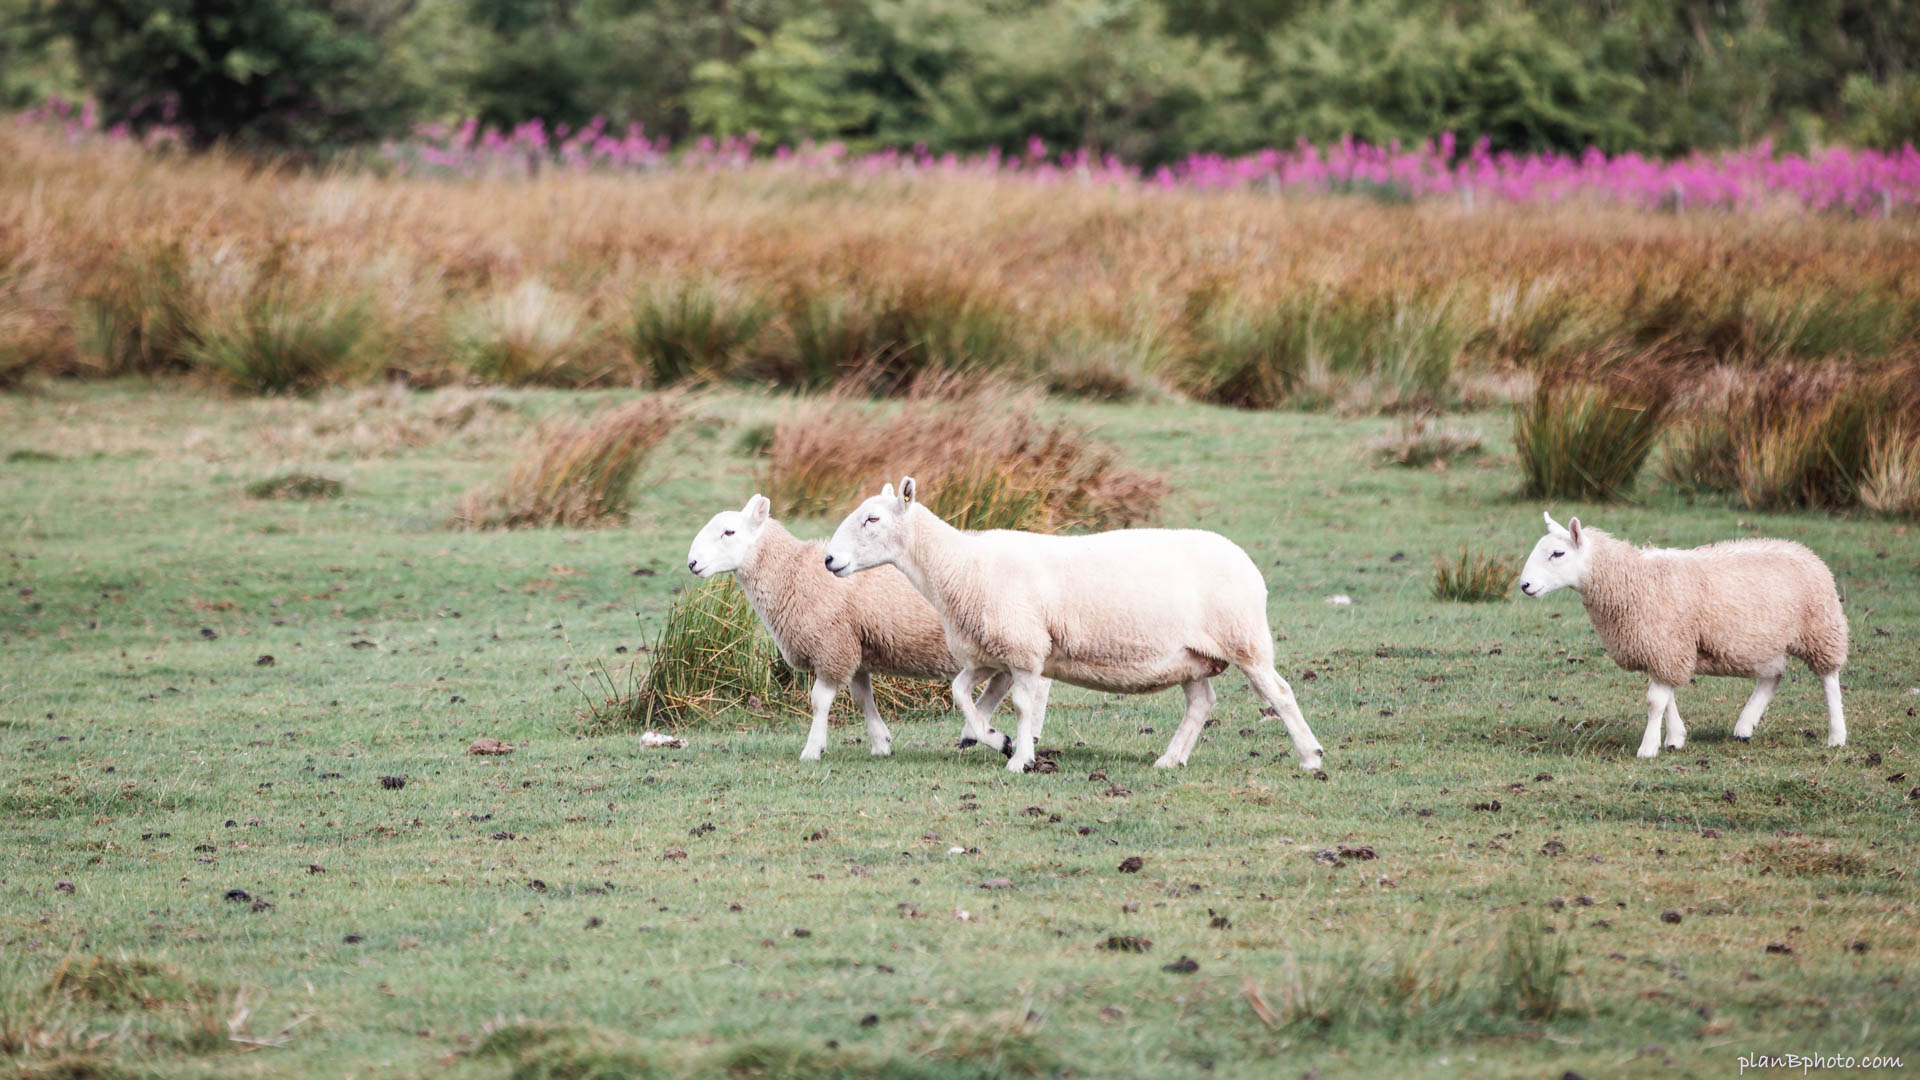 Grassland with three white sheeps walking in autumn